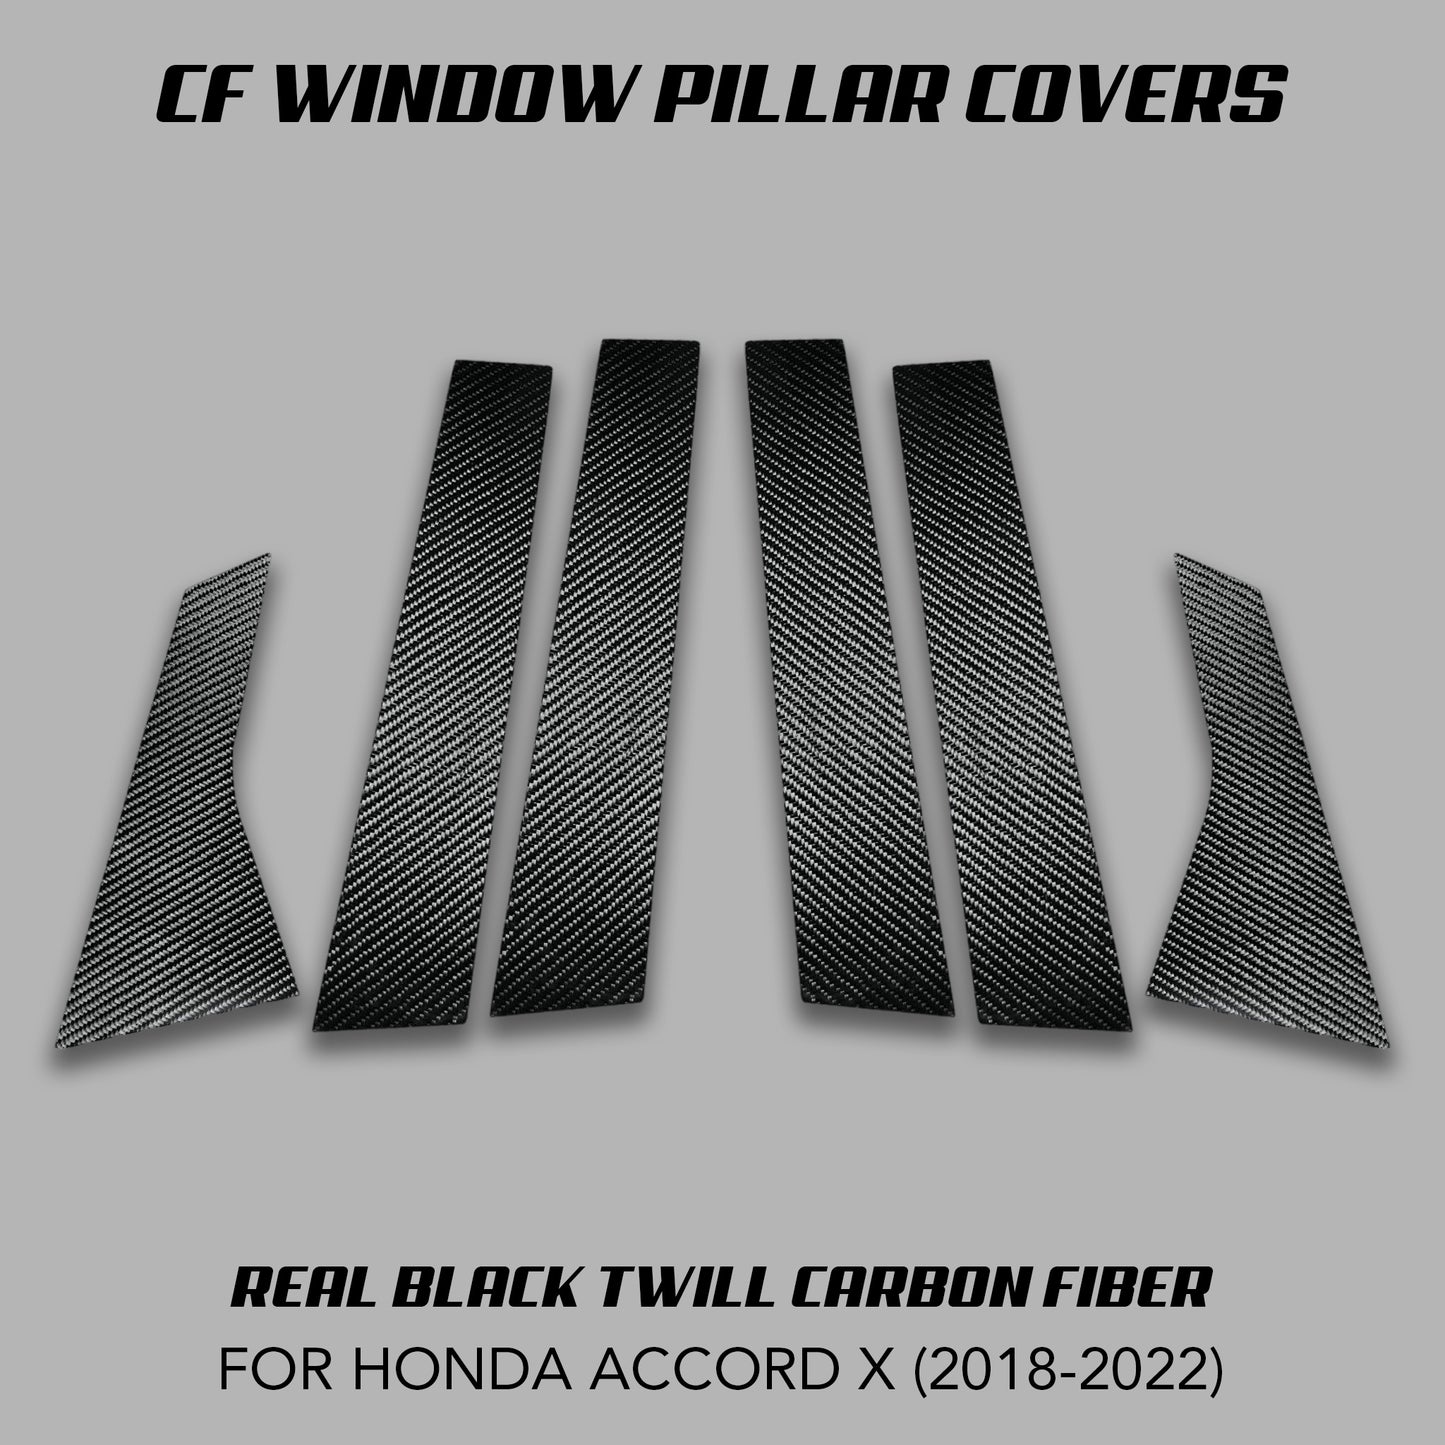 [ACCORD X] REAL CARBON FIBER WINDOW PILLAR COVERS (SHIPS 3/20)